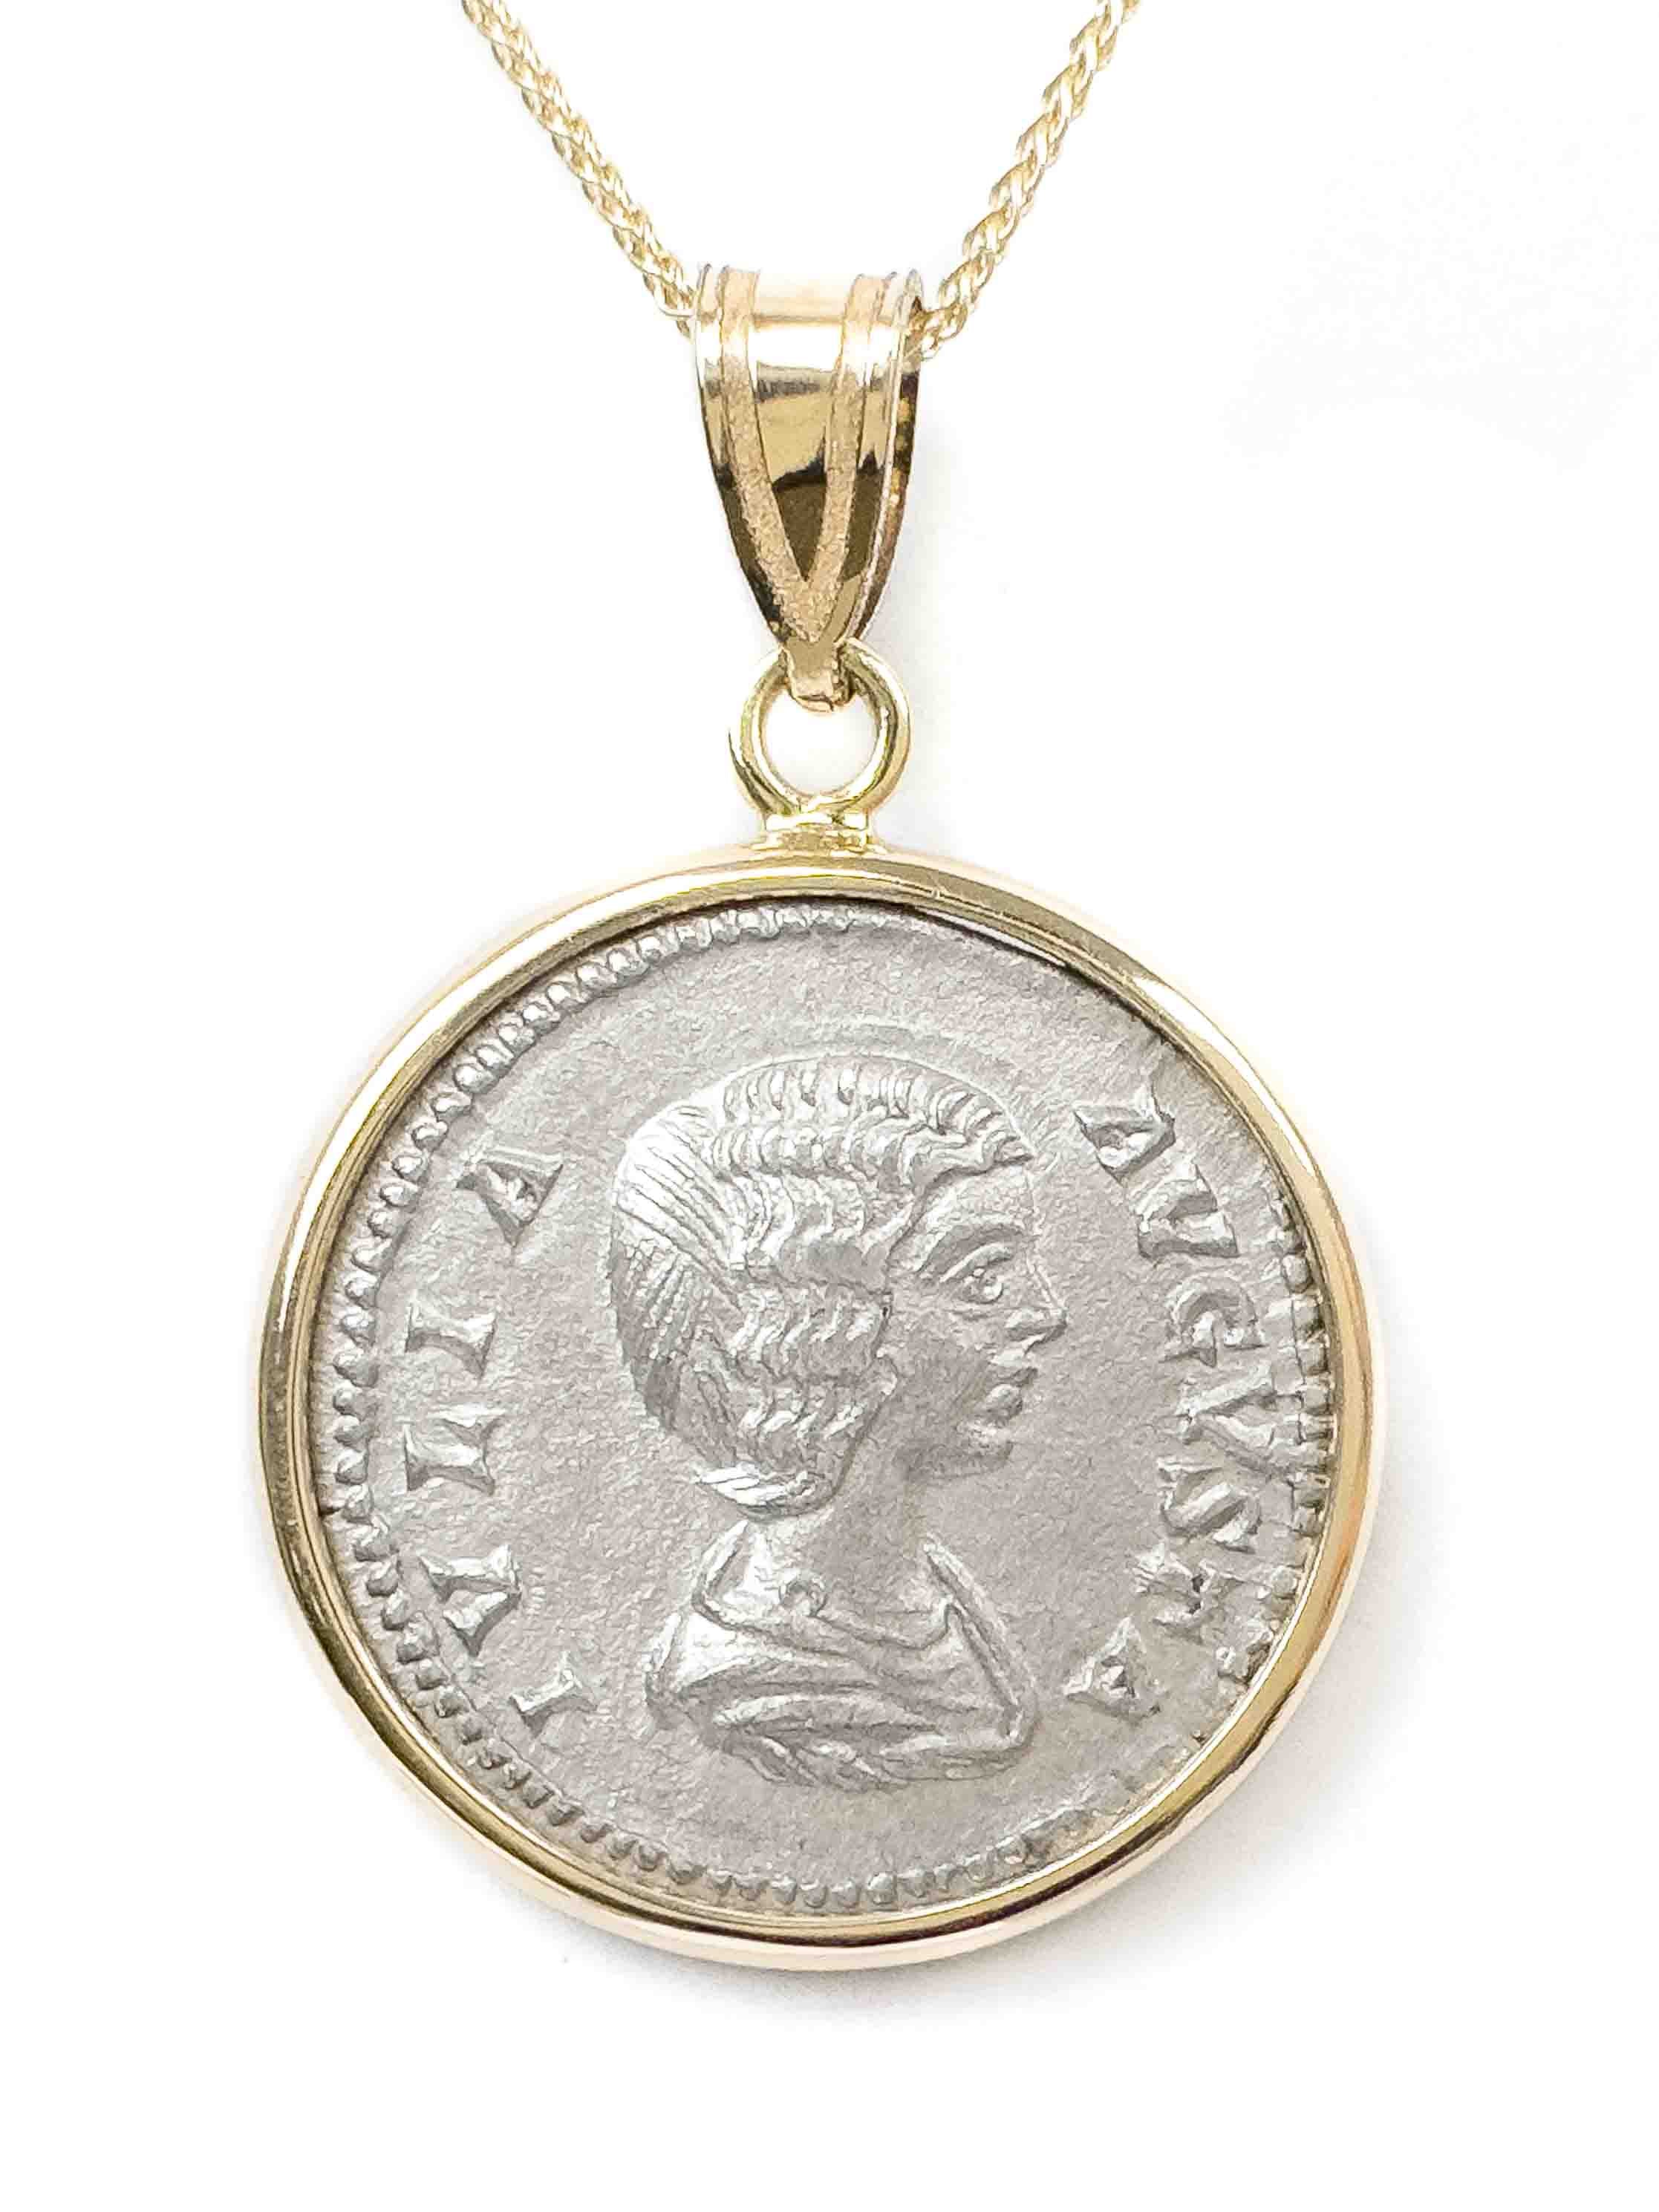 14k Gold Genuine Ancient Roman Coin Necklace (Julia Domna; 196-211 A.D.)